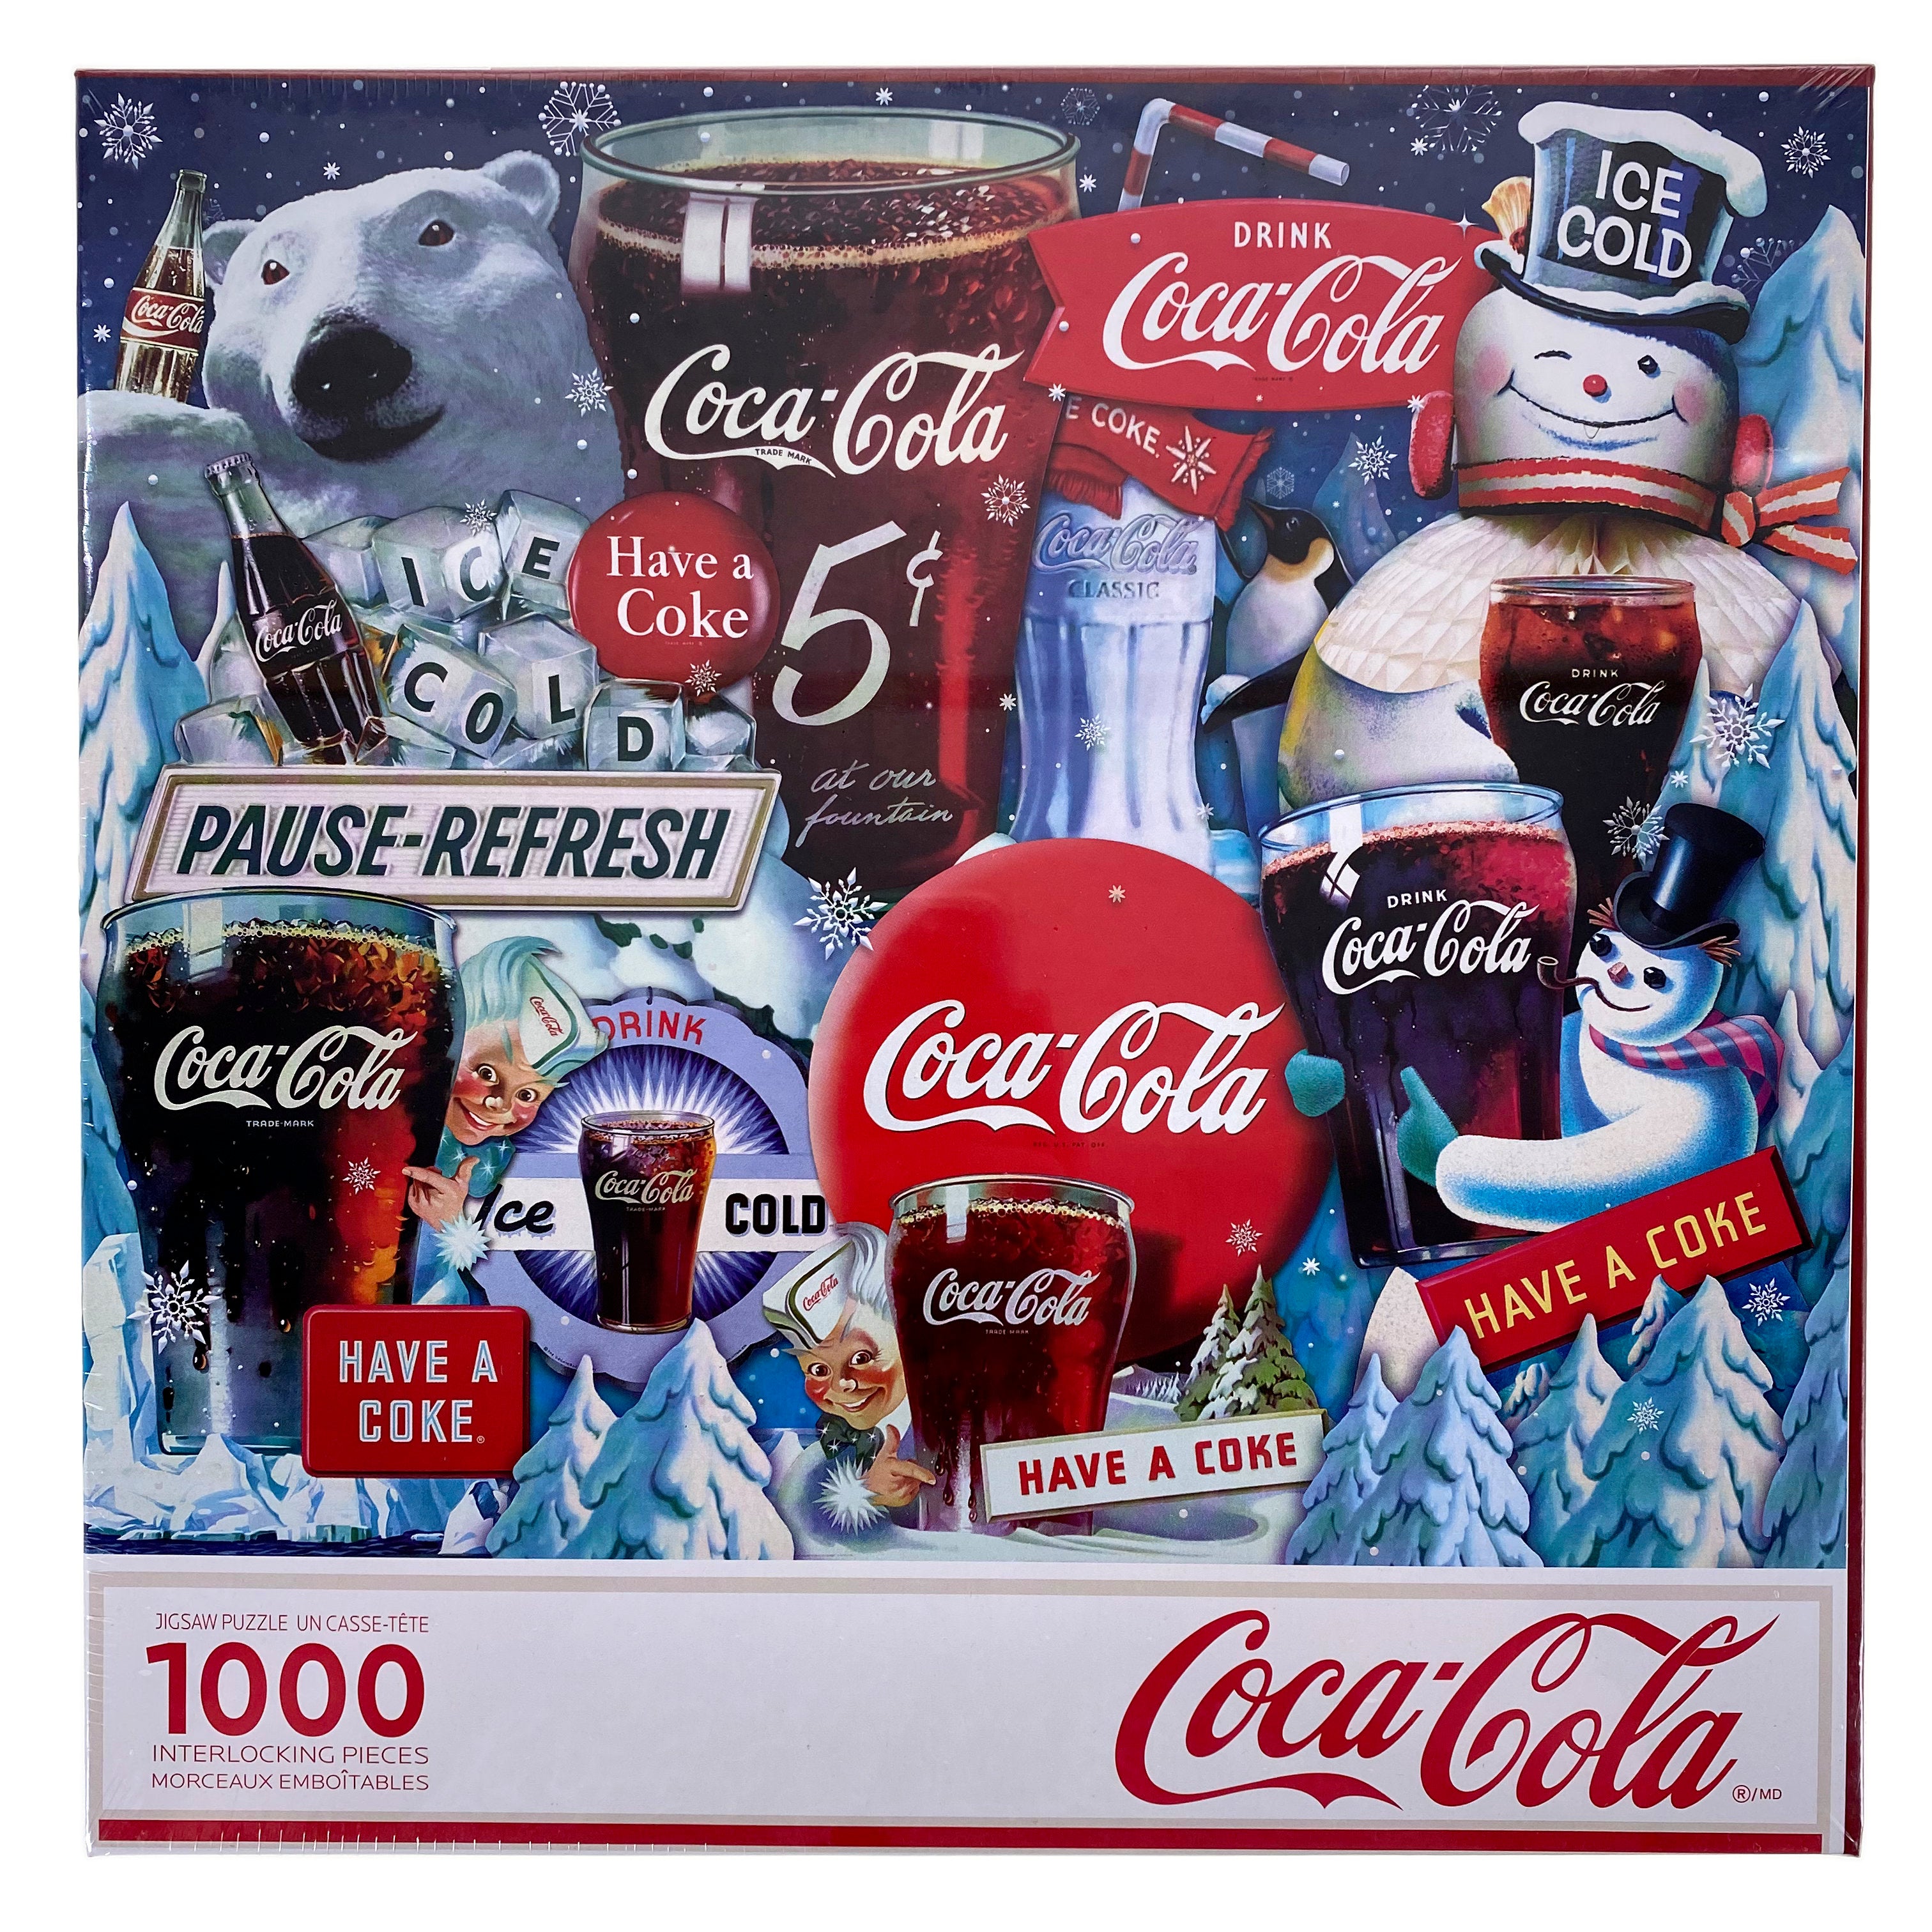 ALLIED PRODUCTS Coca-Cola 1000 Piece Puzzle, Coke Bottles Artwork, 30 